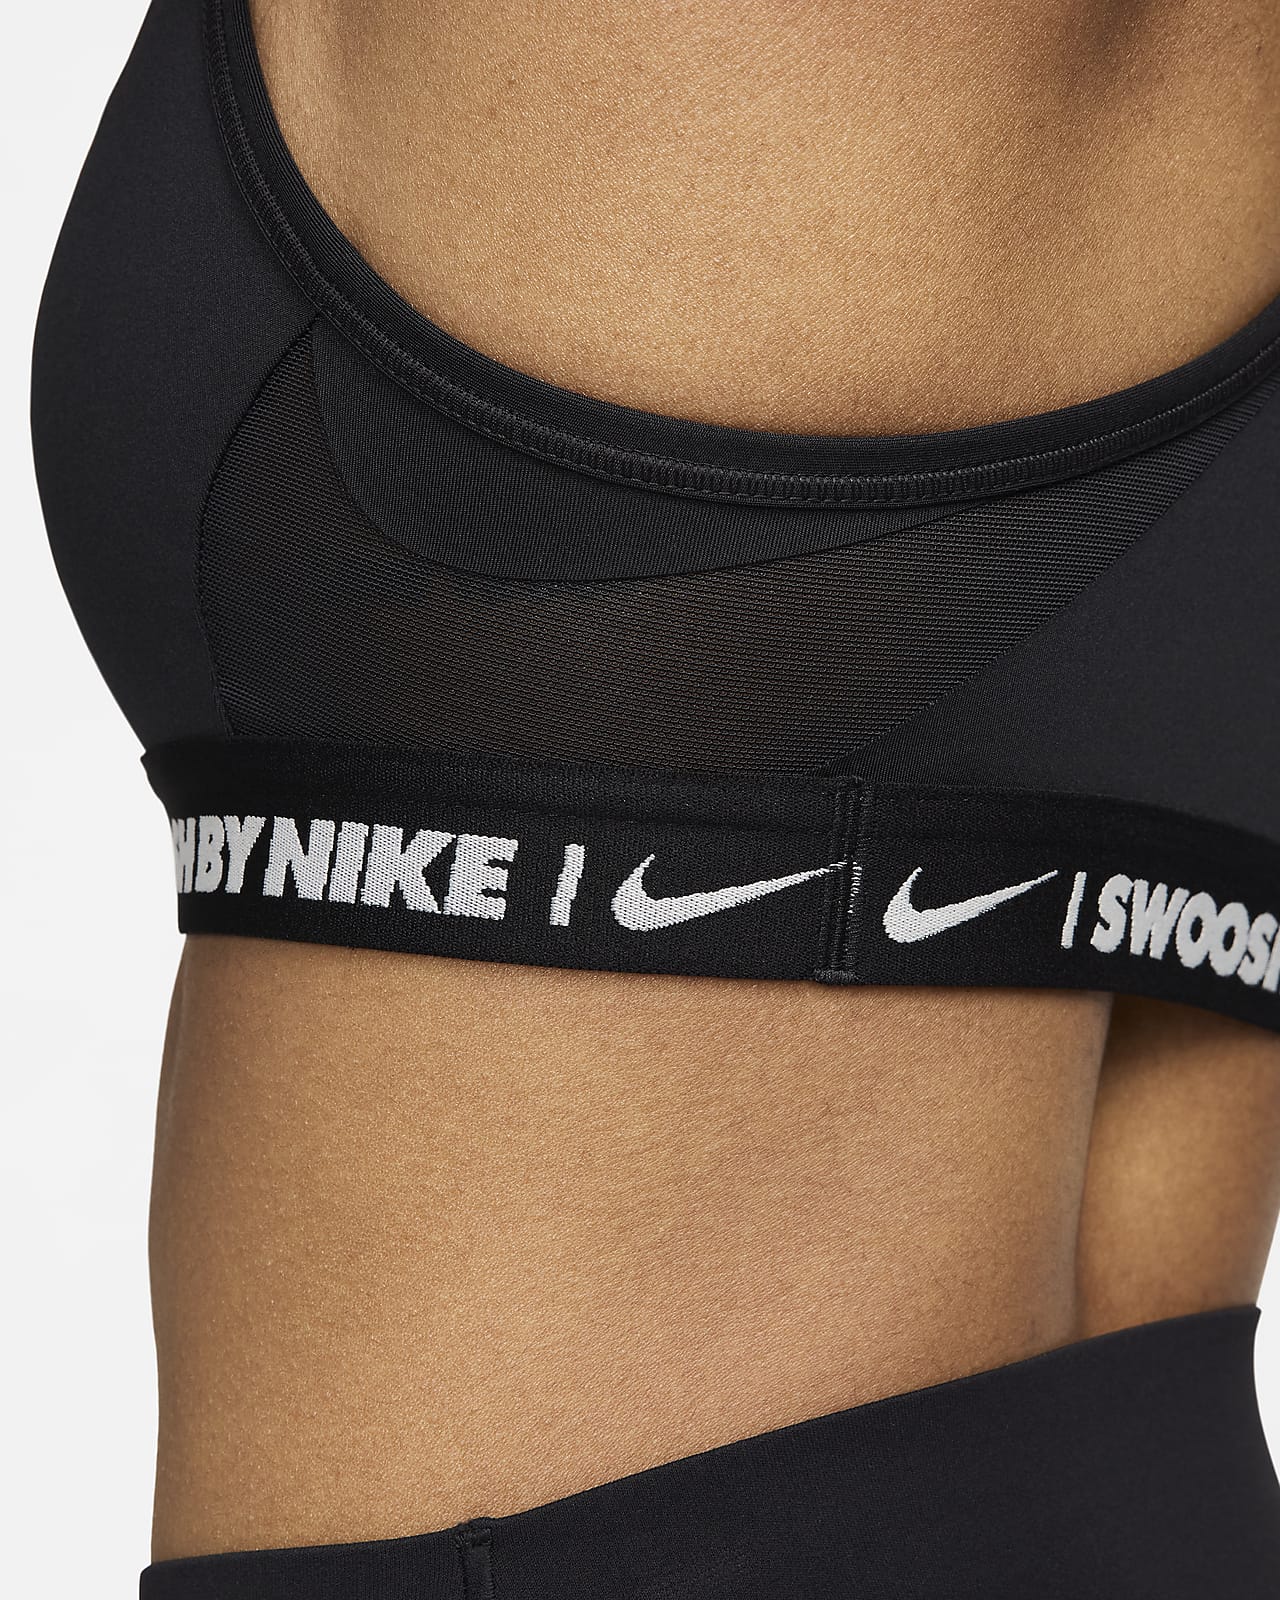 Nike Indy Women's Light-Support Padded U-Neck Sports Bra, Black